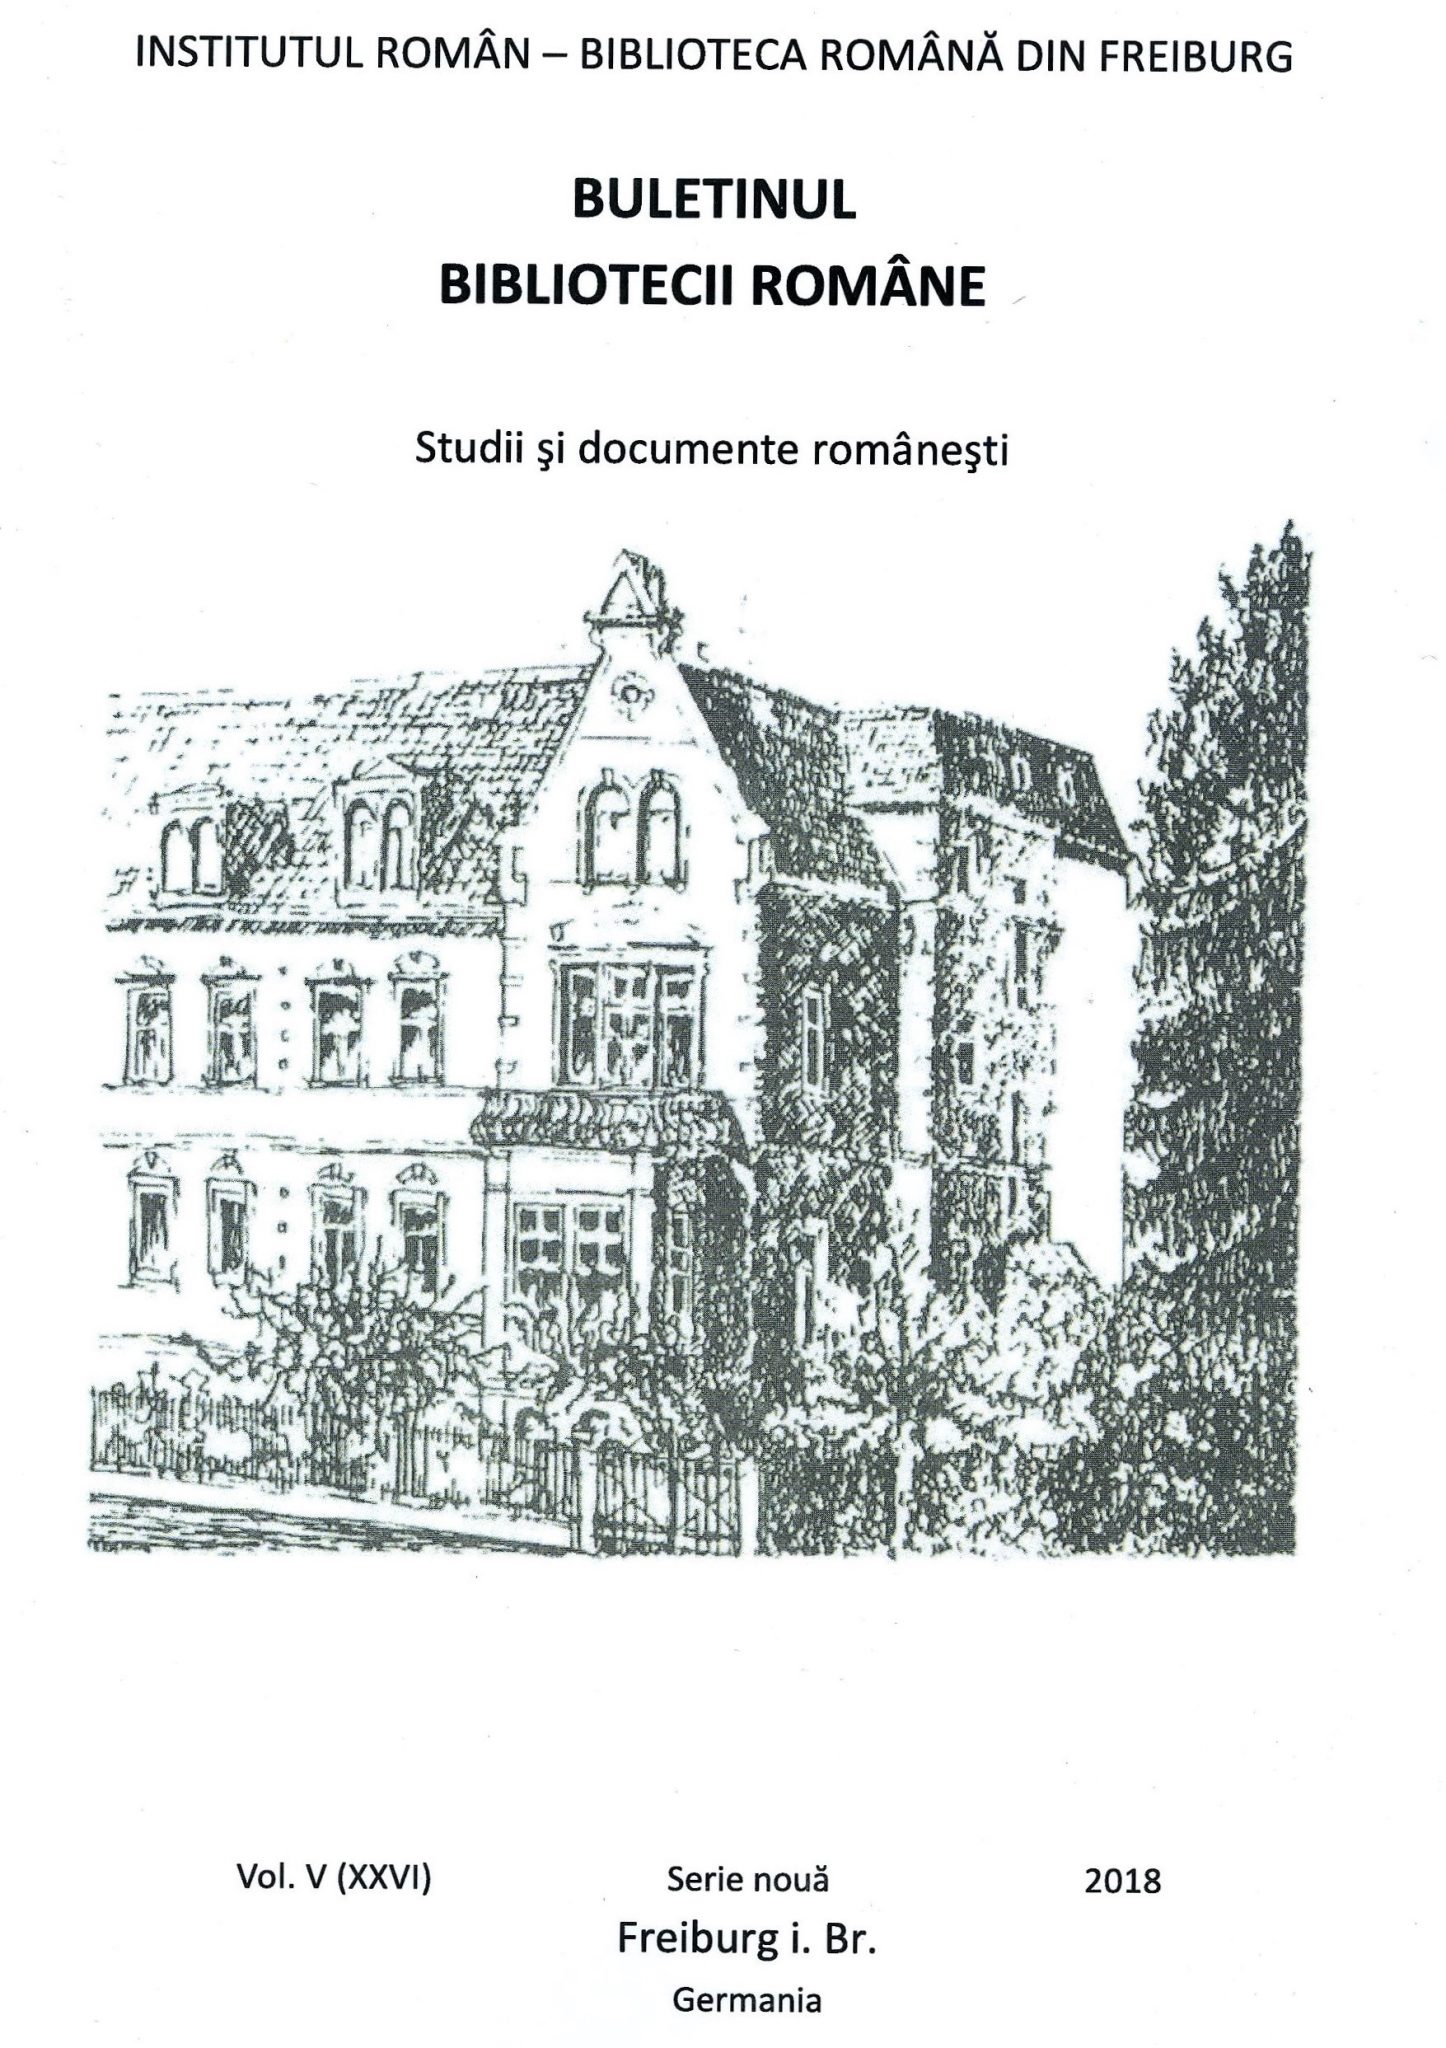 Coperta ,,Buletin informativ al Bibliotecii Române din Freiburg"